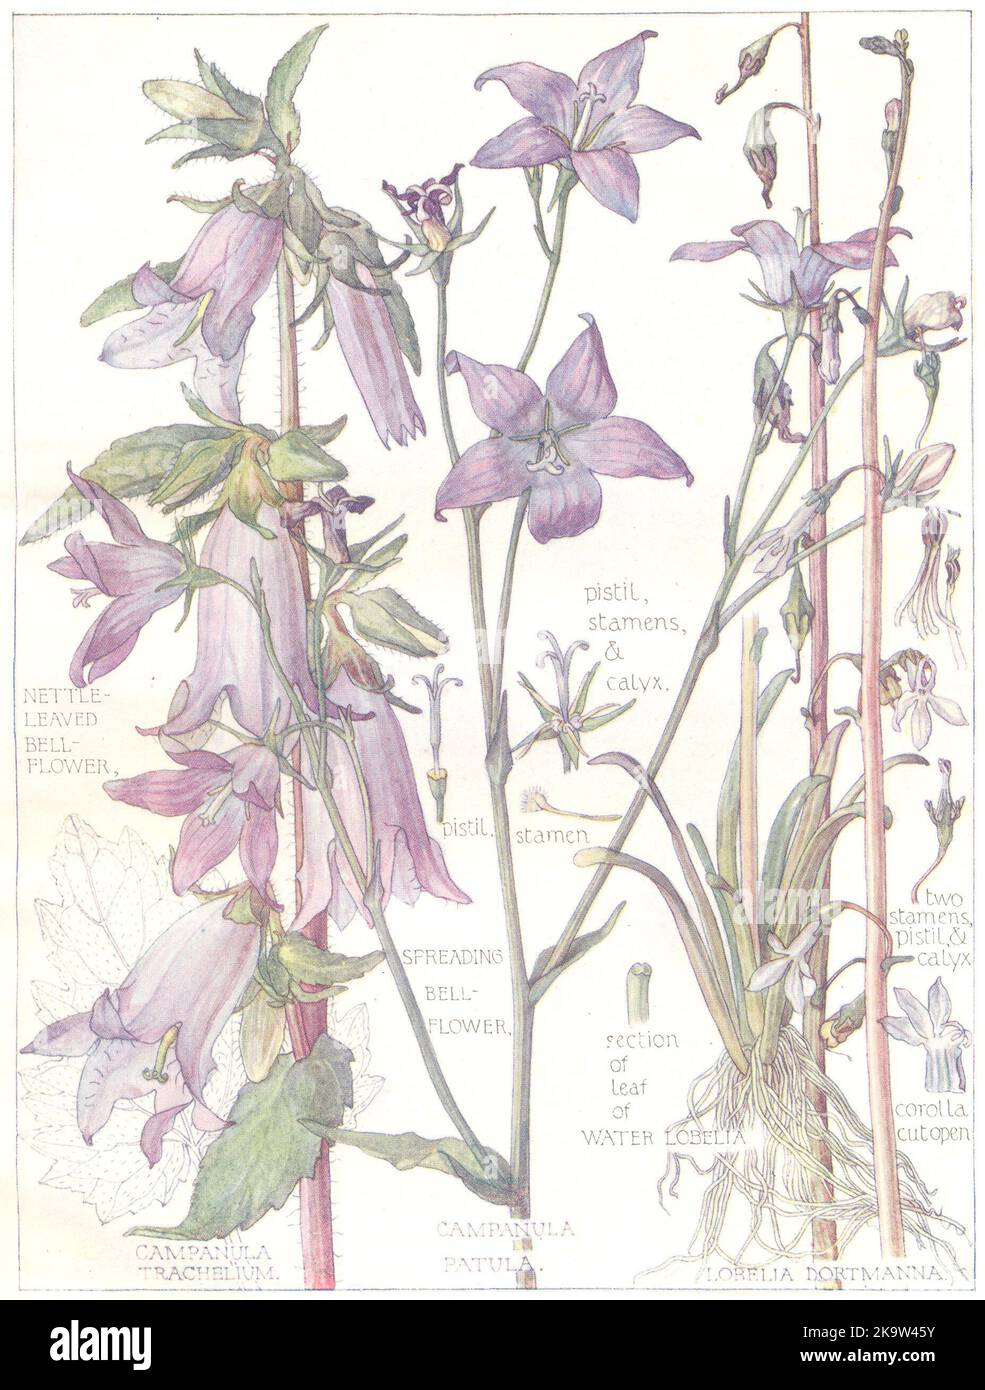 BELL-FLOWER.Campanulaceae.Nettle-Leaved,Spreading Bell-Flower;Water Lobelia 1907 Stock Photo